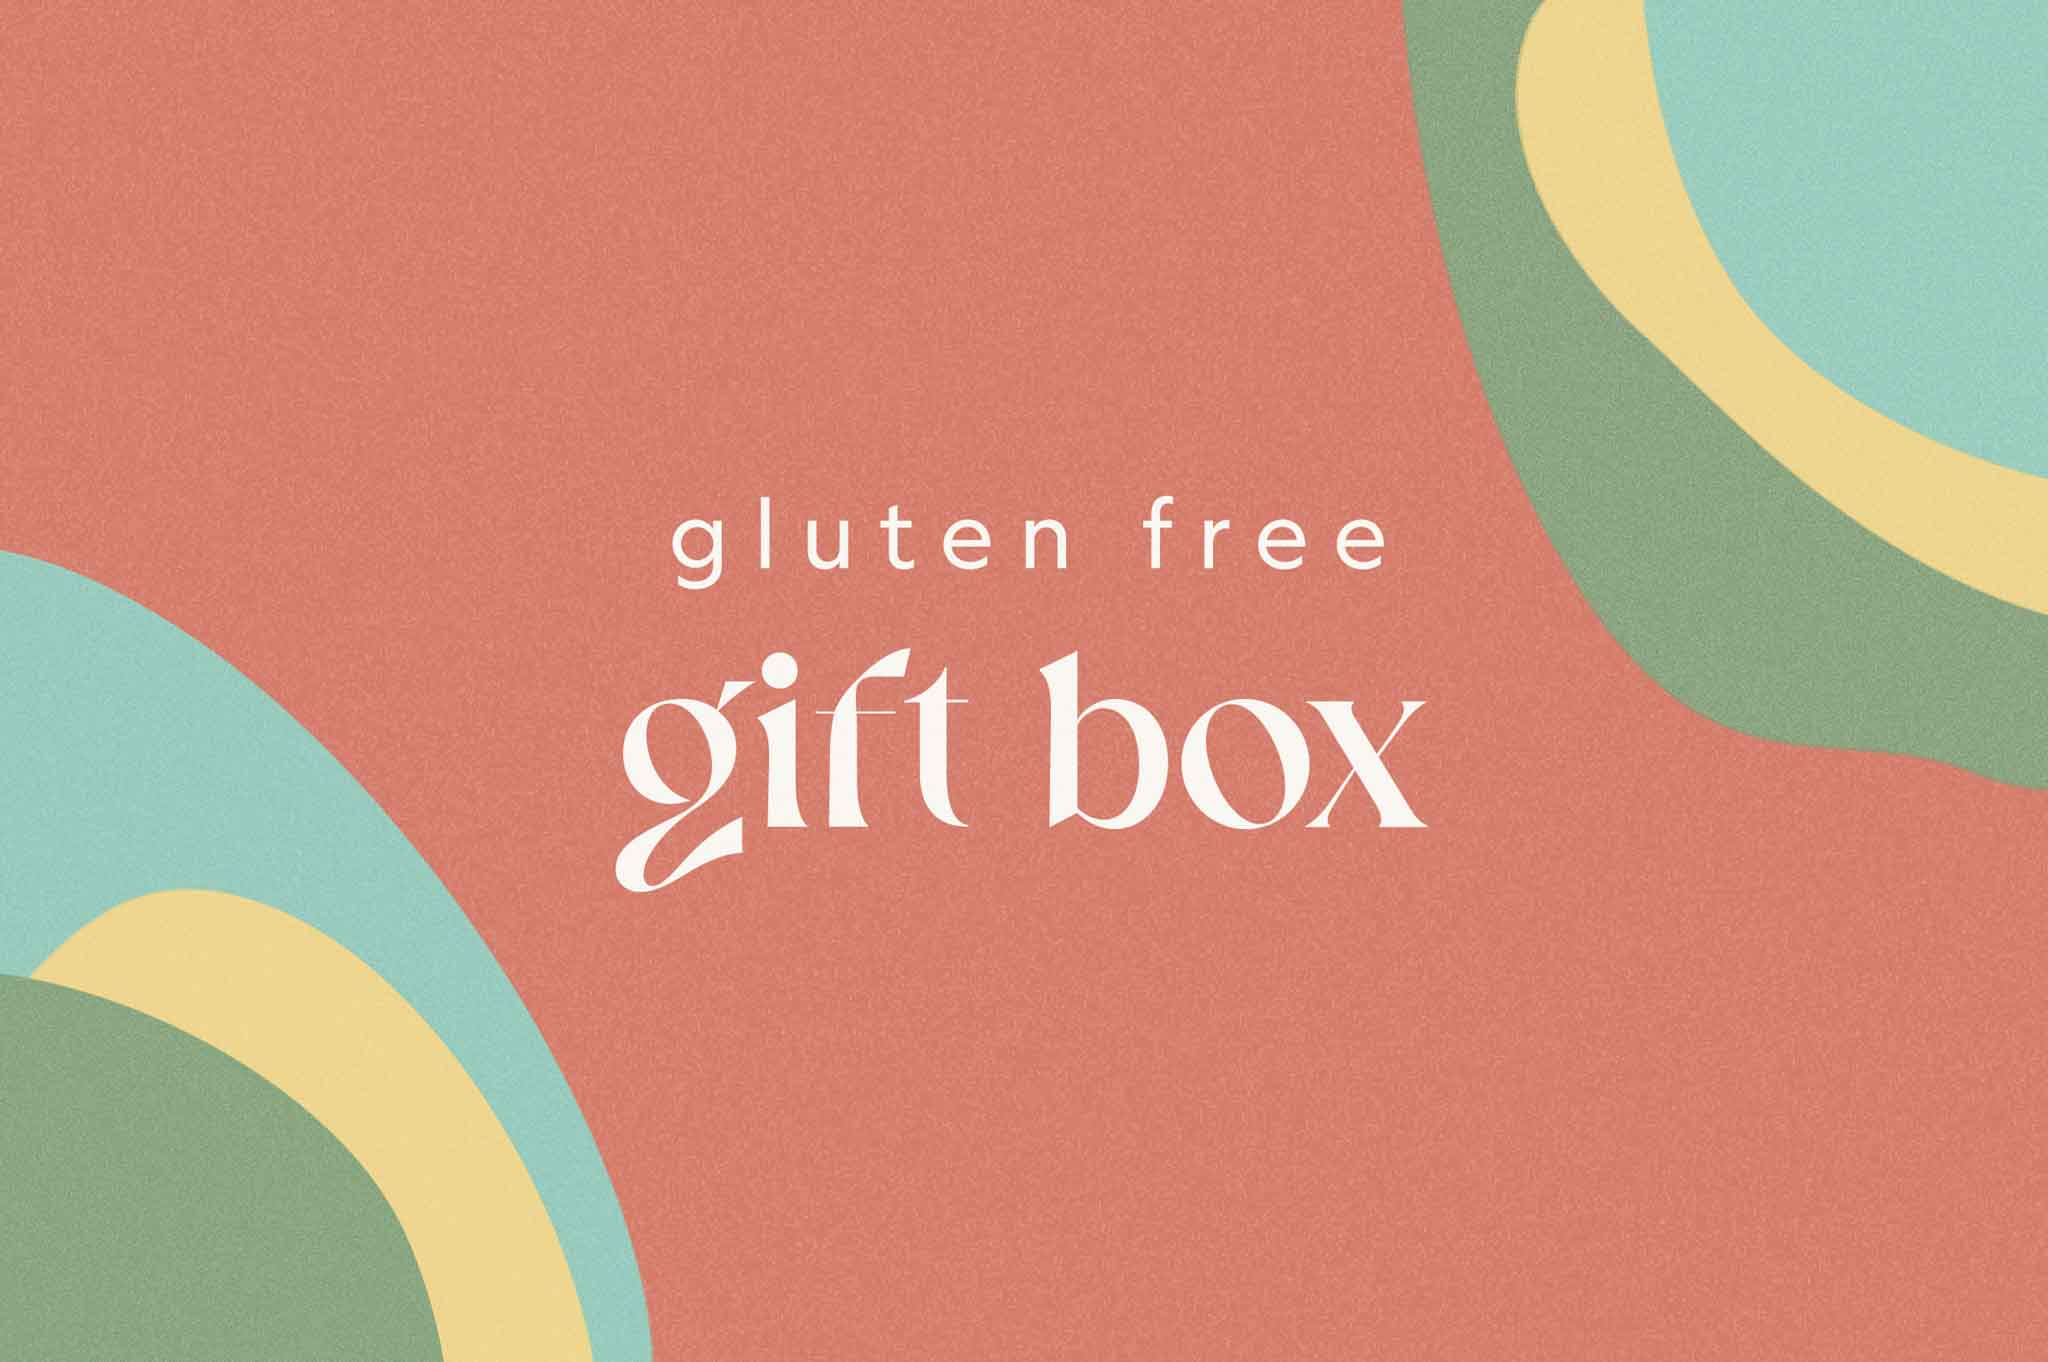 gluten free gift box